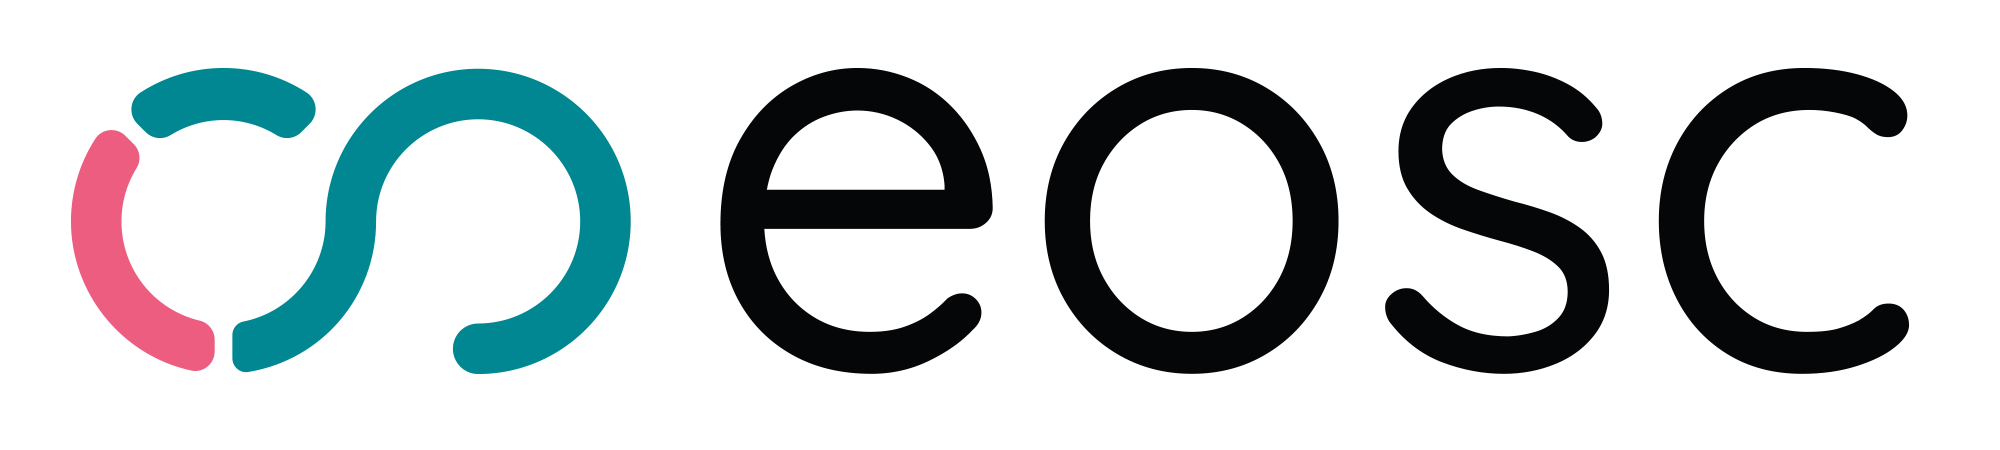 EOSC logo